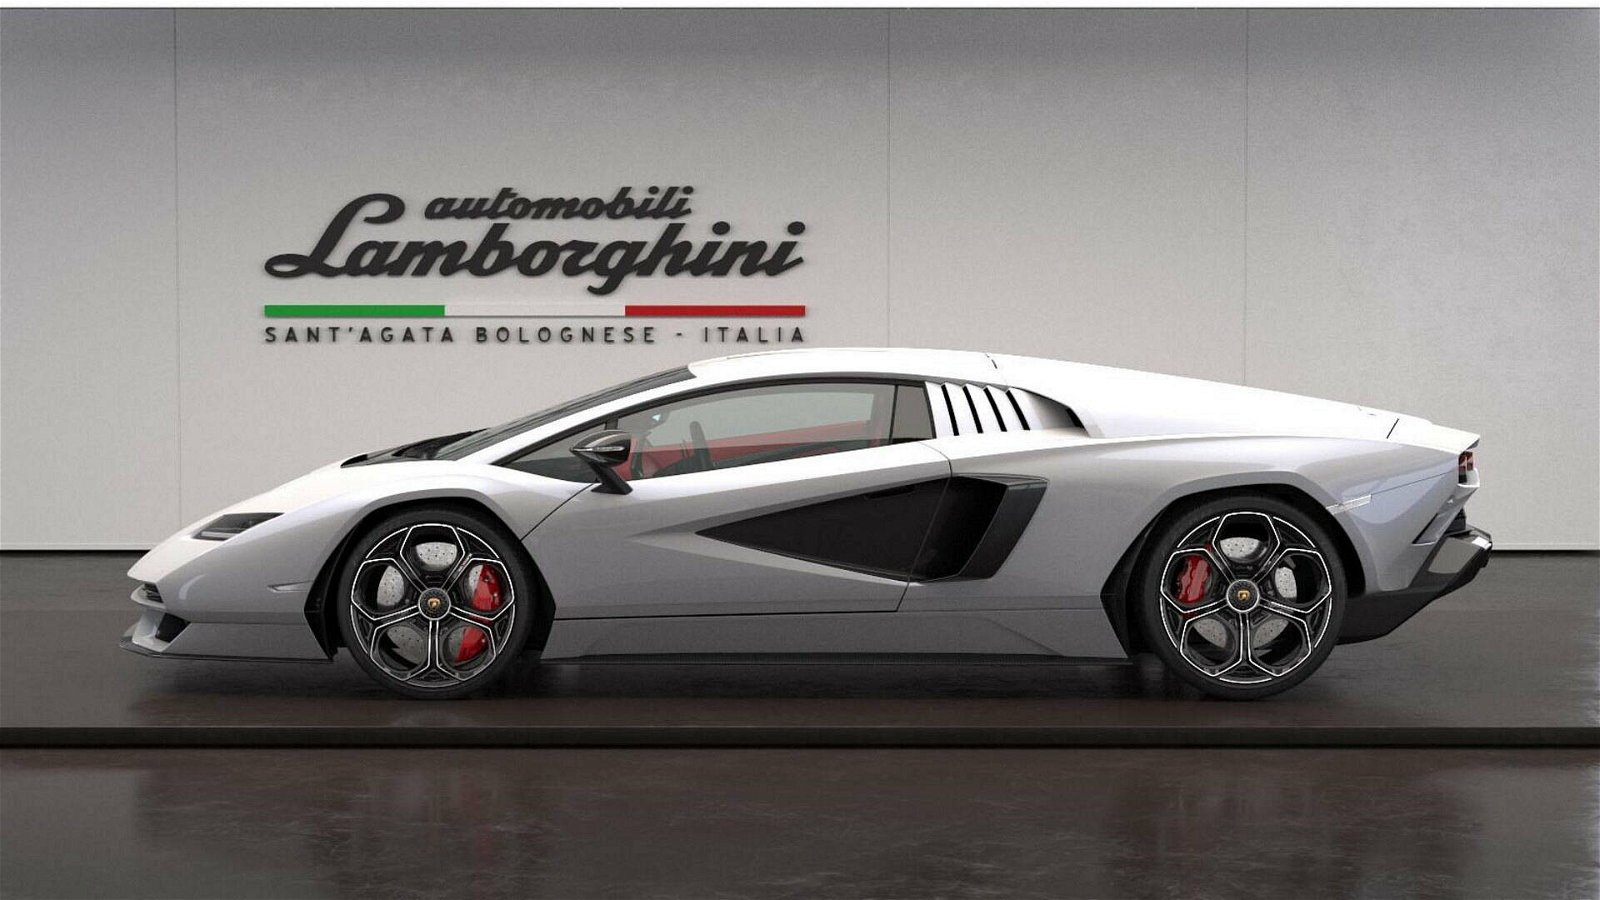 Immagine di Lamborghini Countach già esaurita, anche senza alettone